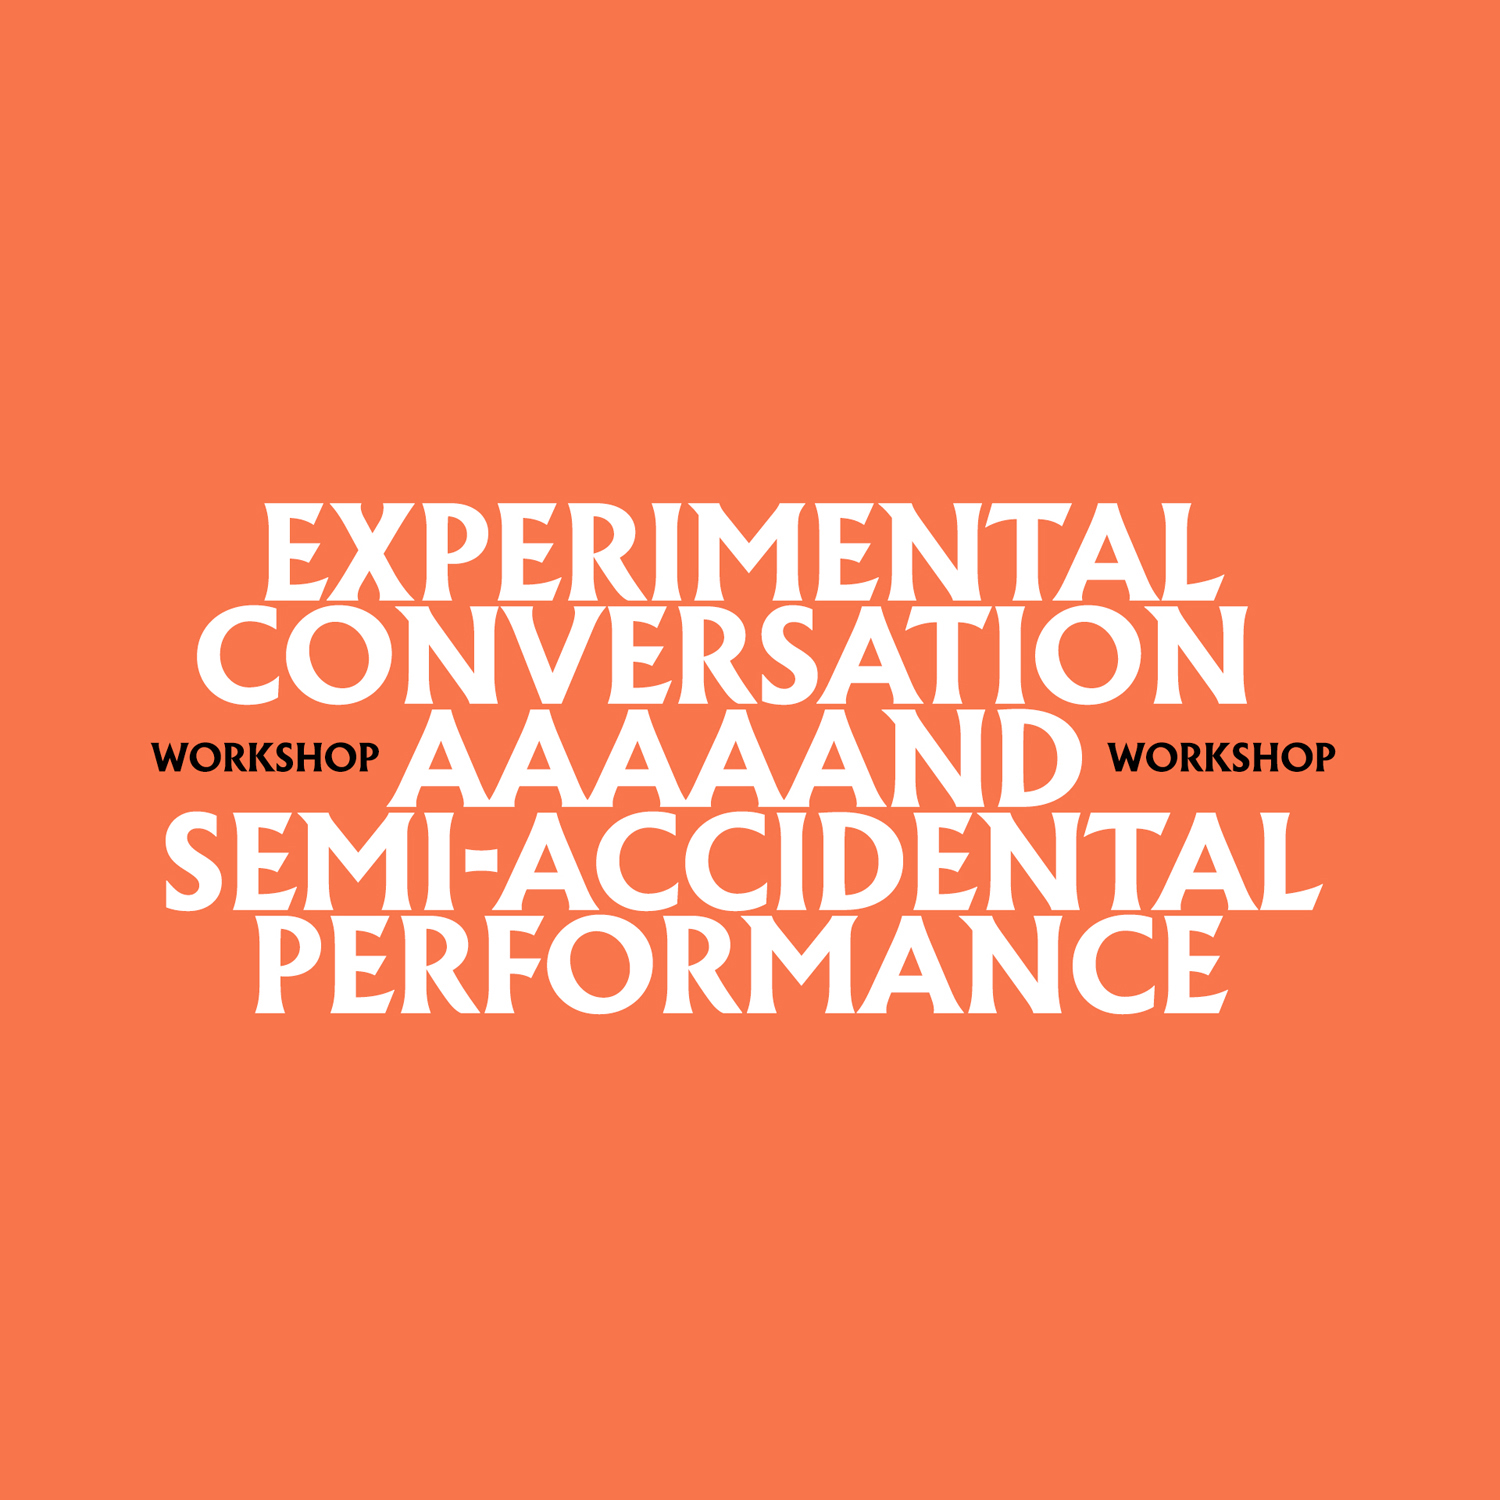 Ray Fenwick, experimental conversation and semi-accidental performance workshop